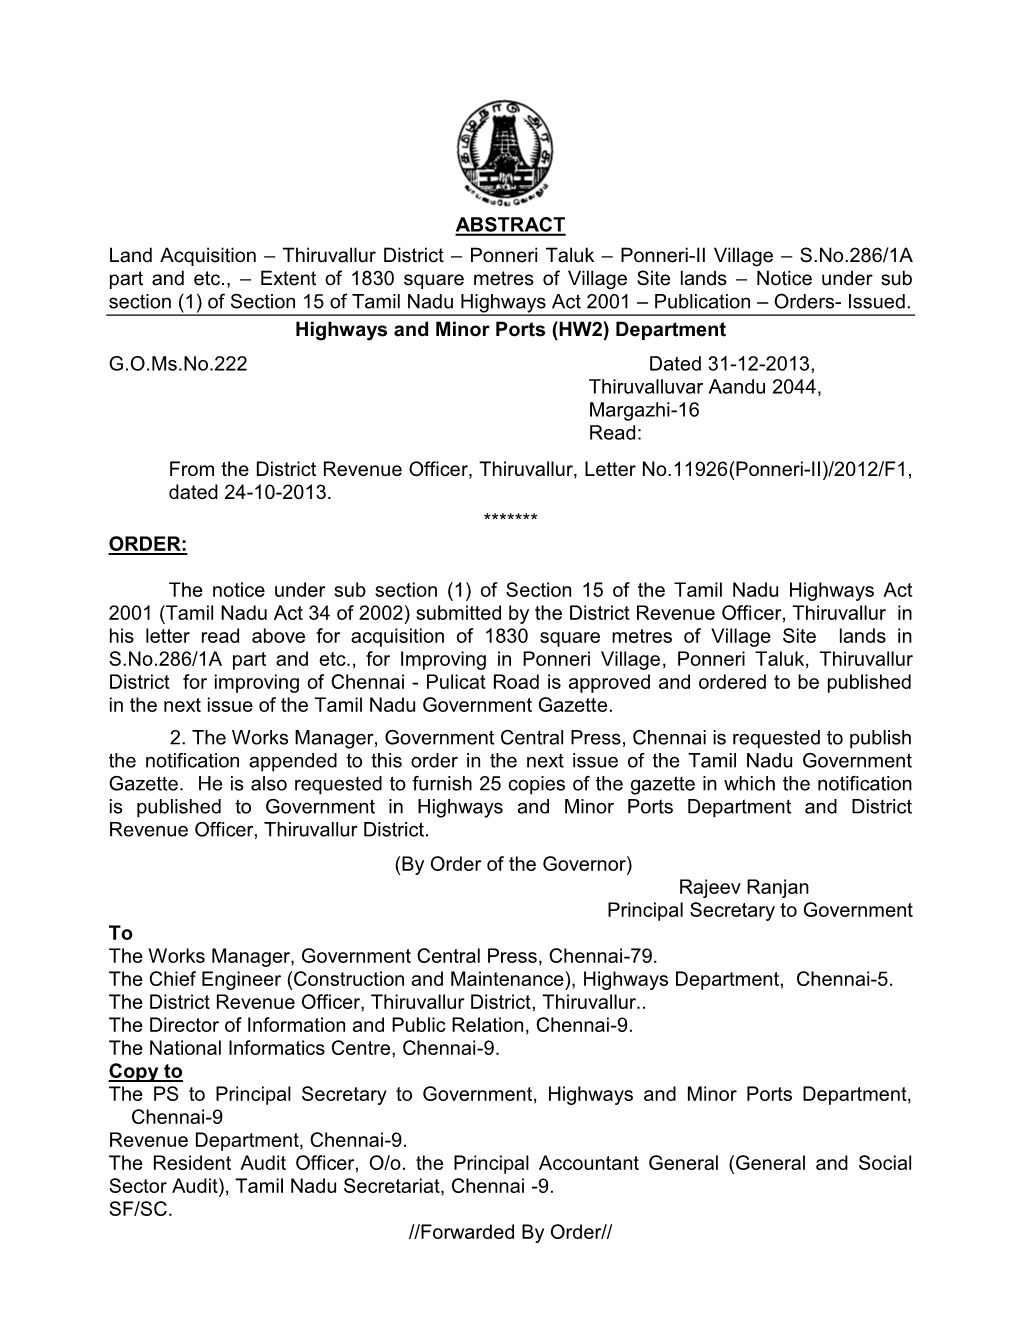 ABSTRACT Land Acquisition – Thiruvallur District – Ponneri Taluk – Ponneri-II Village – S.No.286/1A Part and Etc